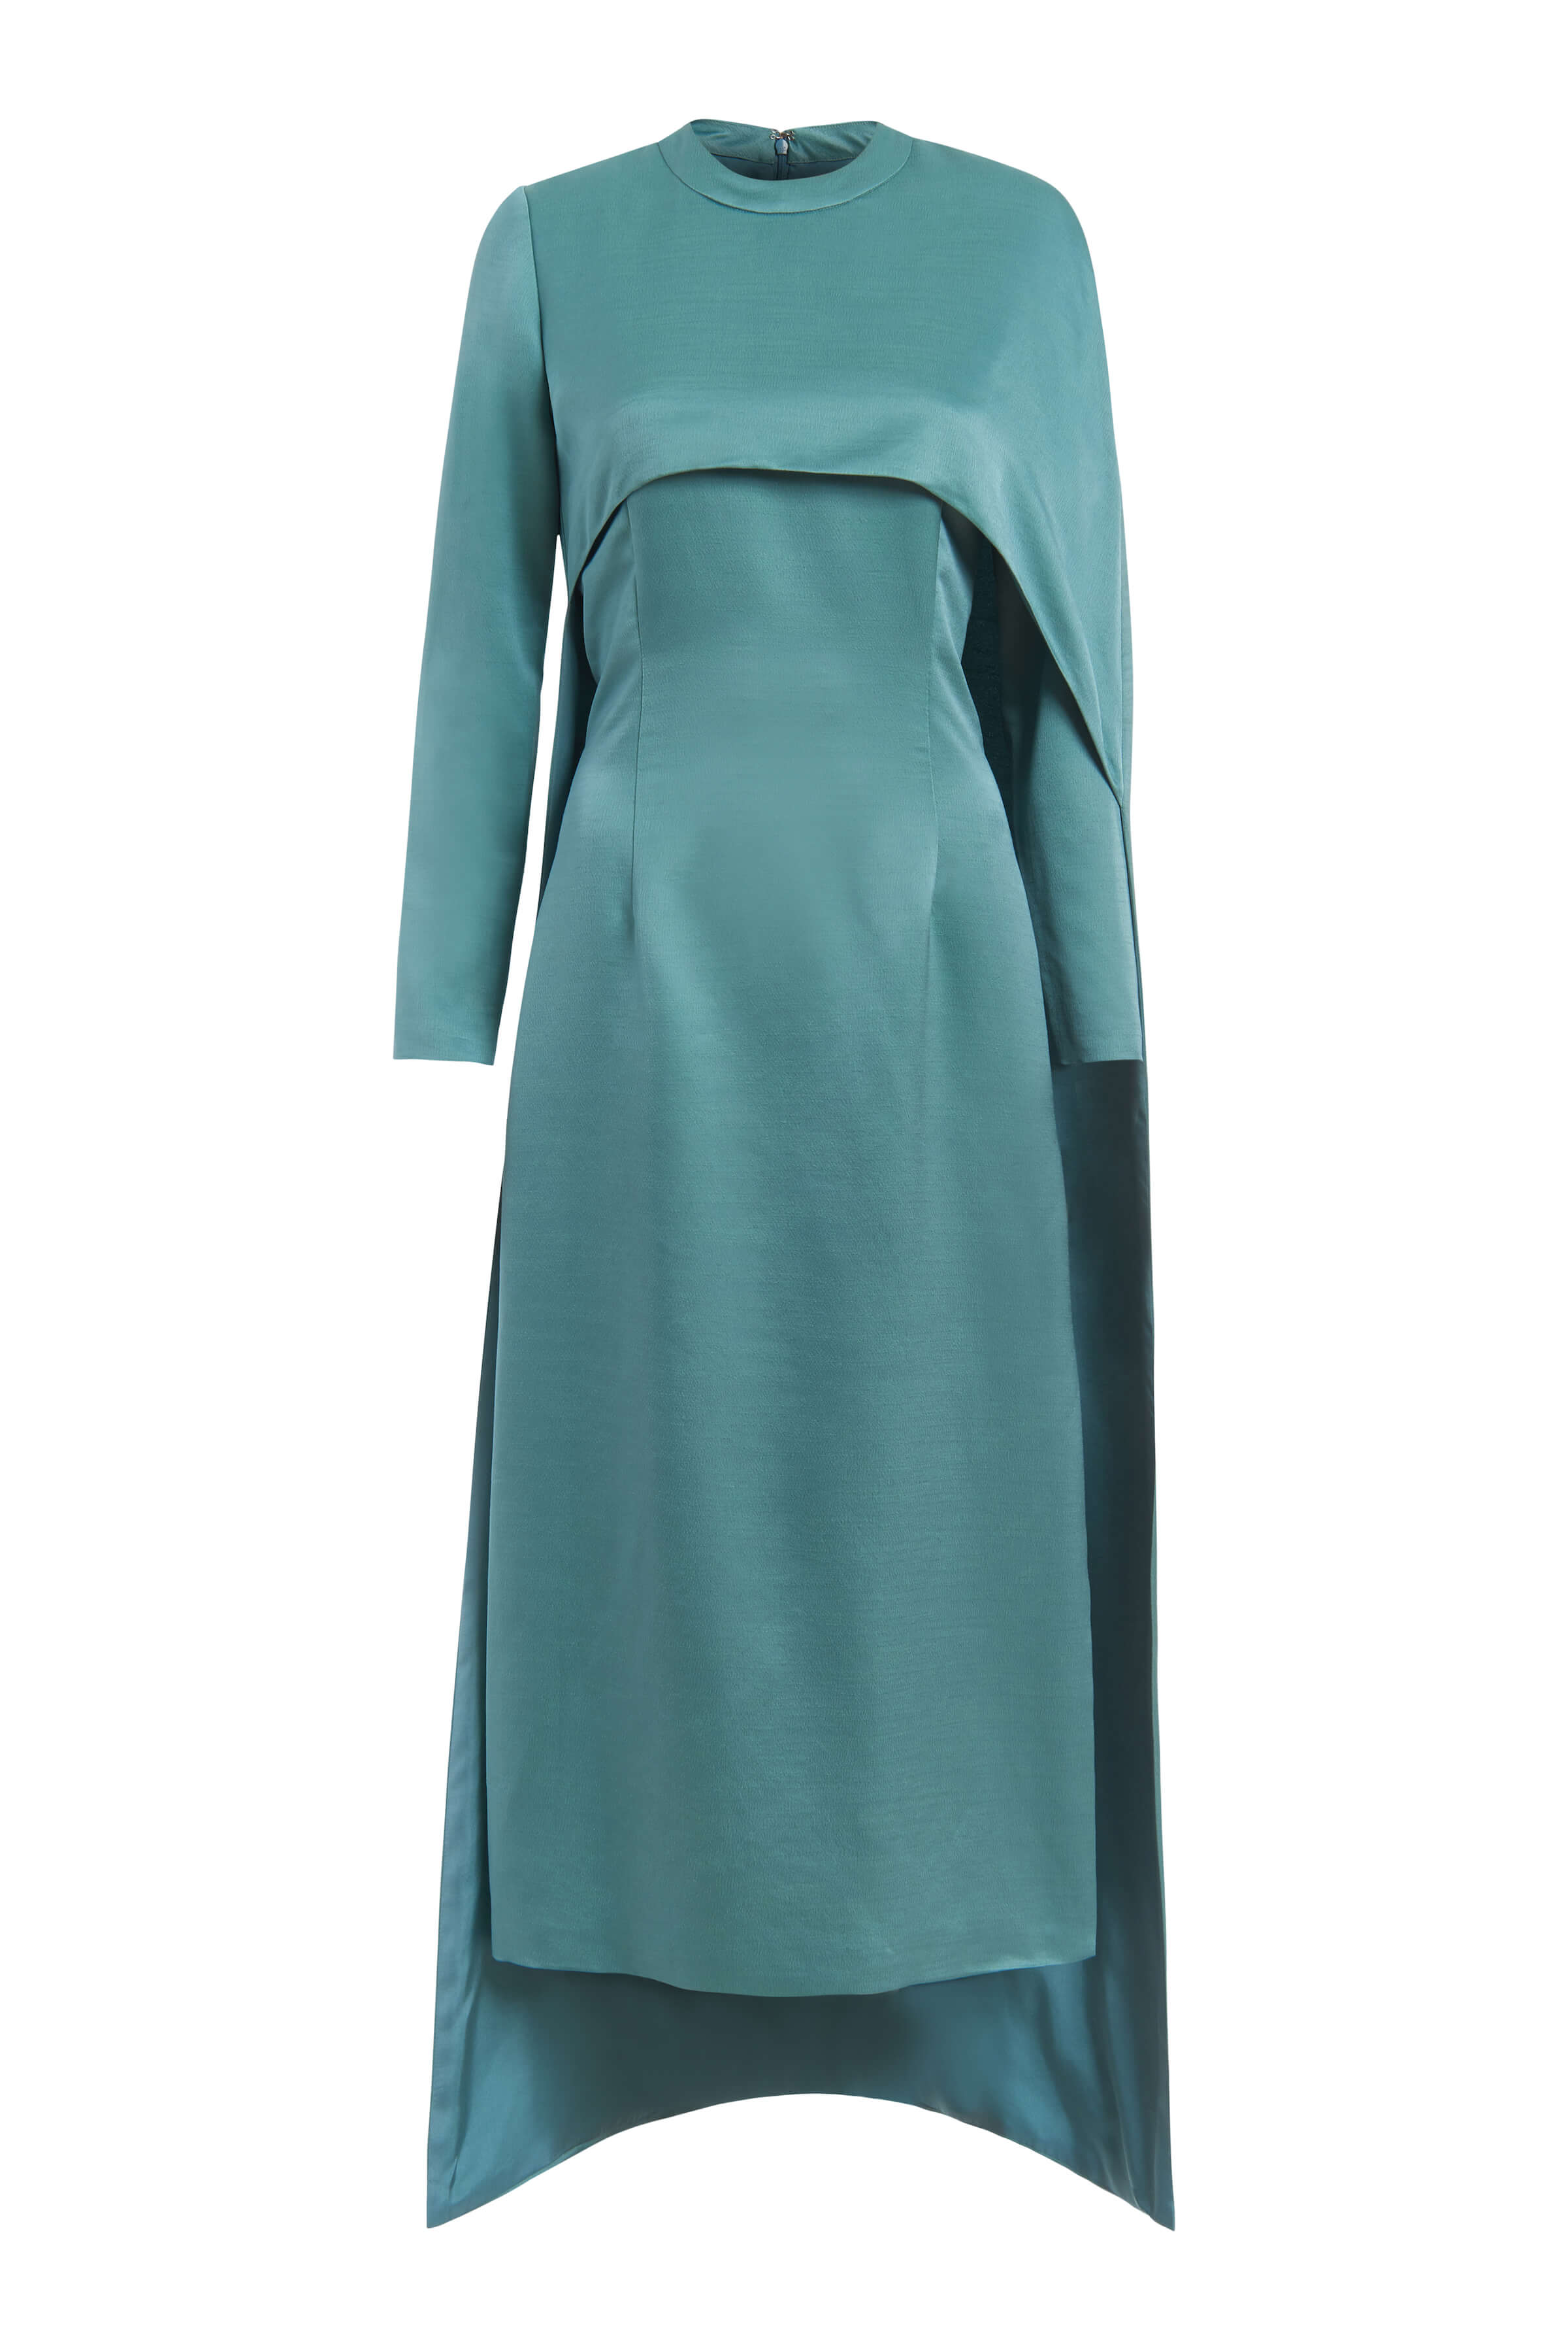 Yolanthe Asymmetric Midaxi Dress in Teal